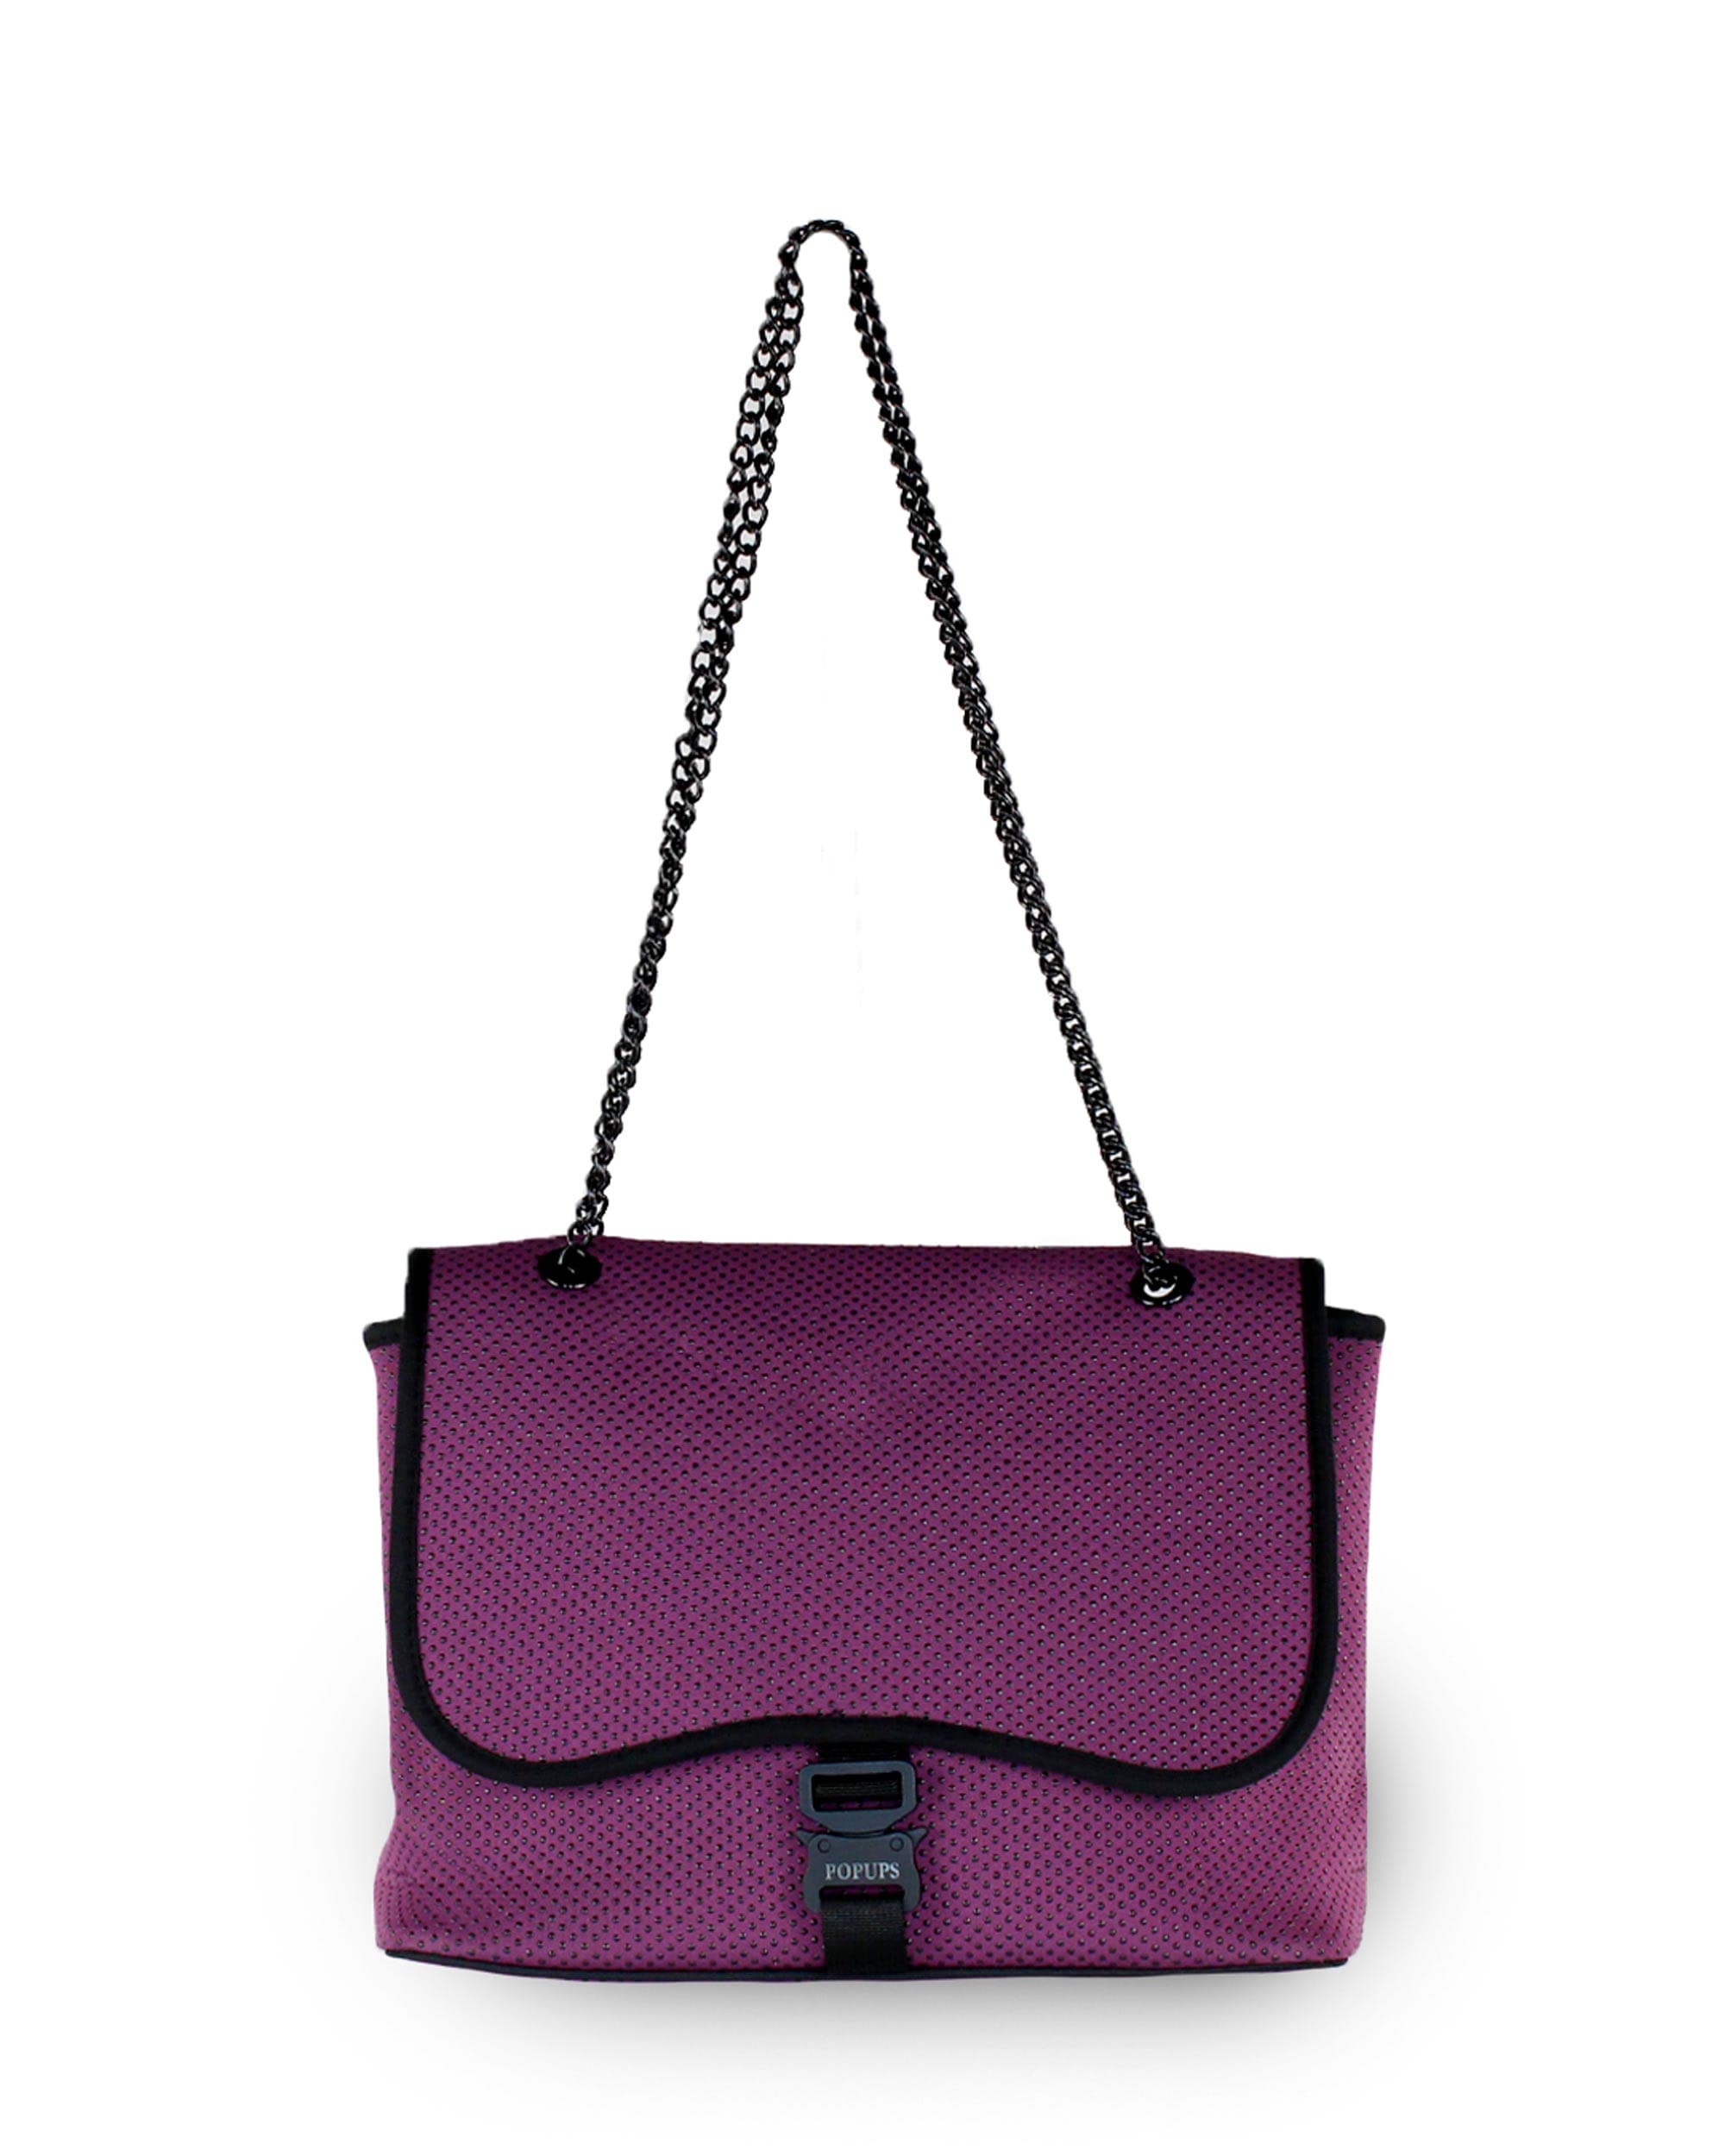 POPUPS Brand Flap Crossbody Bag- Neoprene, Adjustable Straps, Water Resistant, Machine Washable, Shoulder Purse for Women